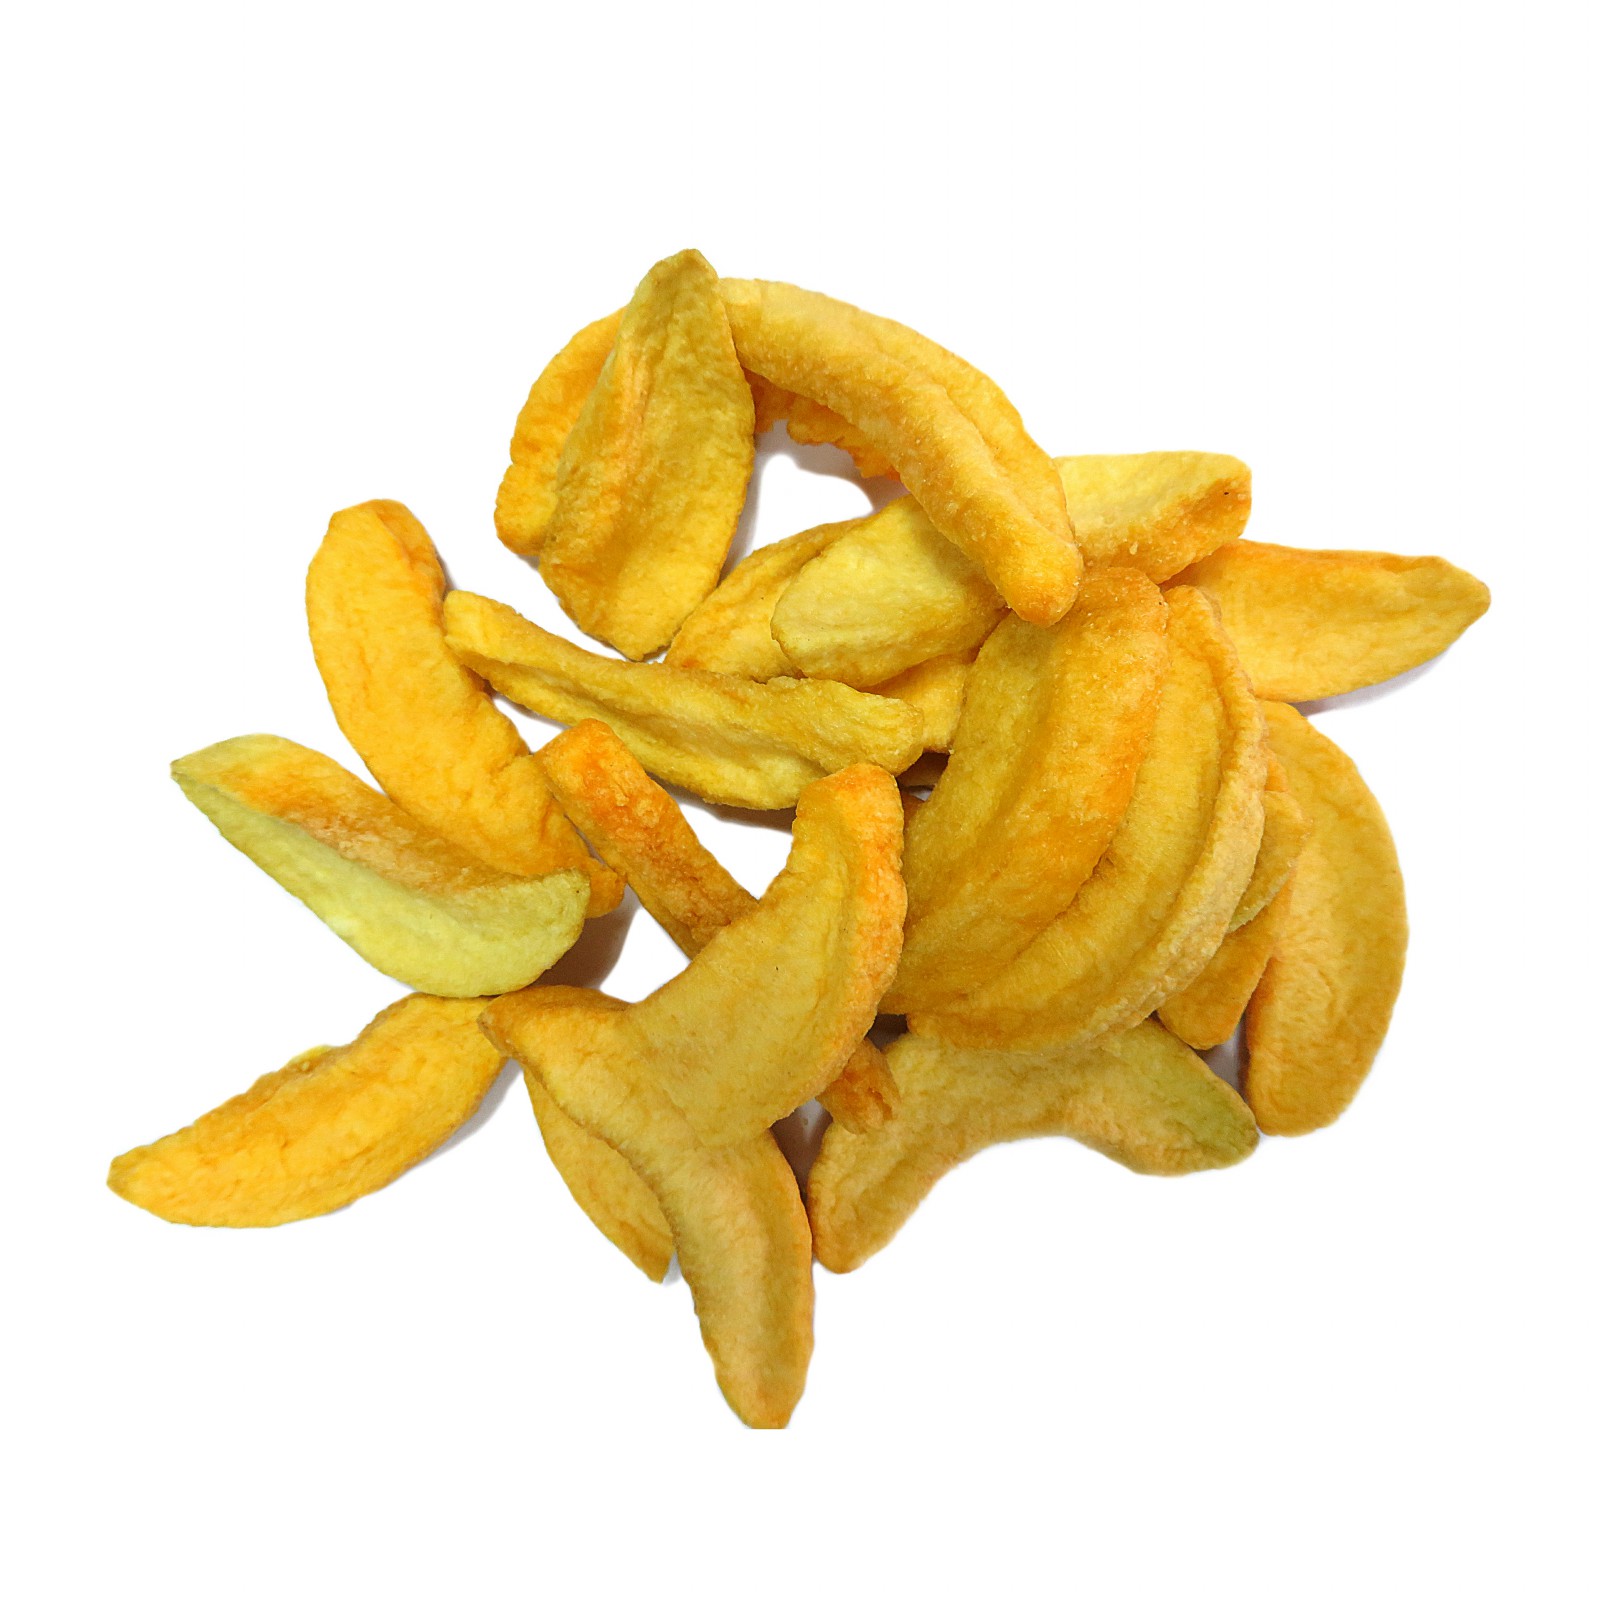 Vacuum fried yellow peach chips